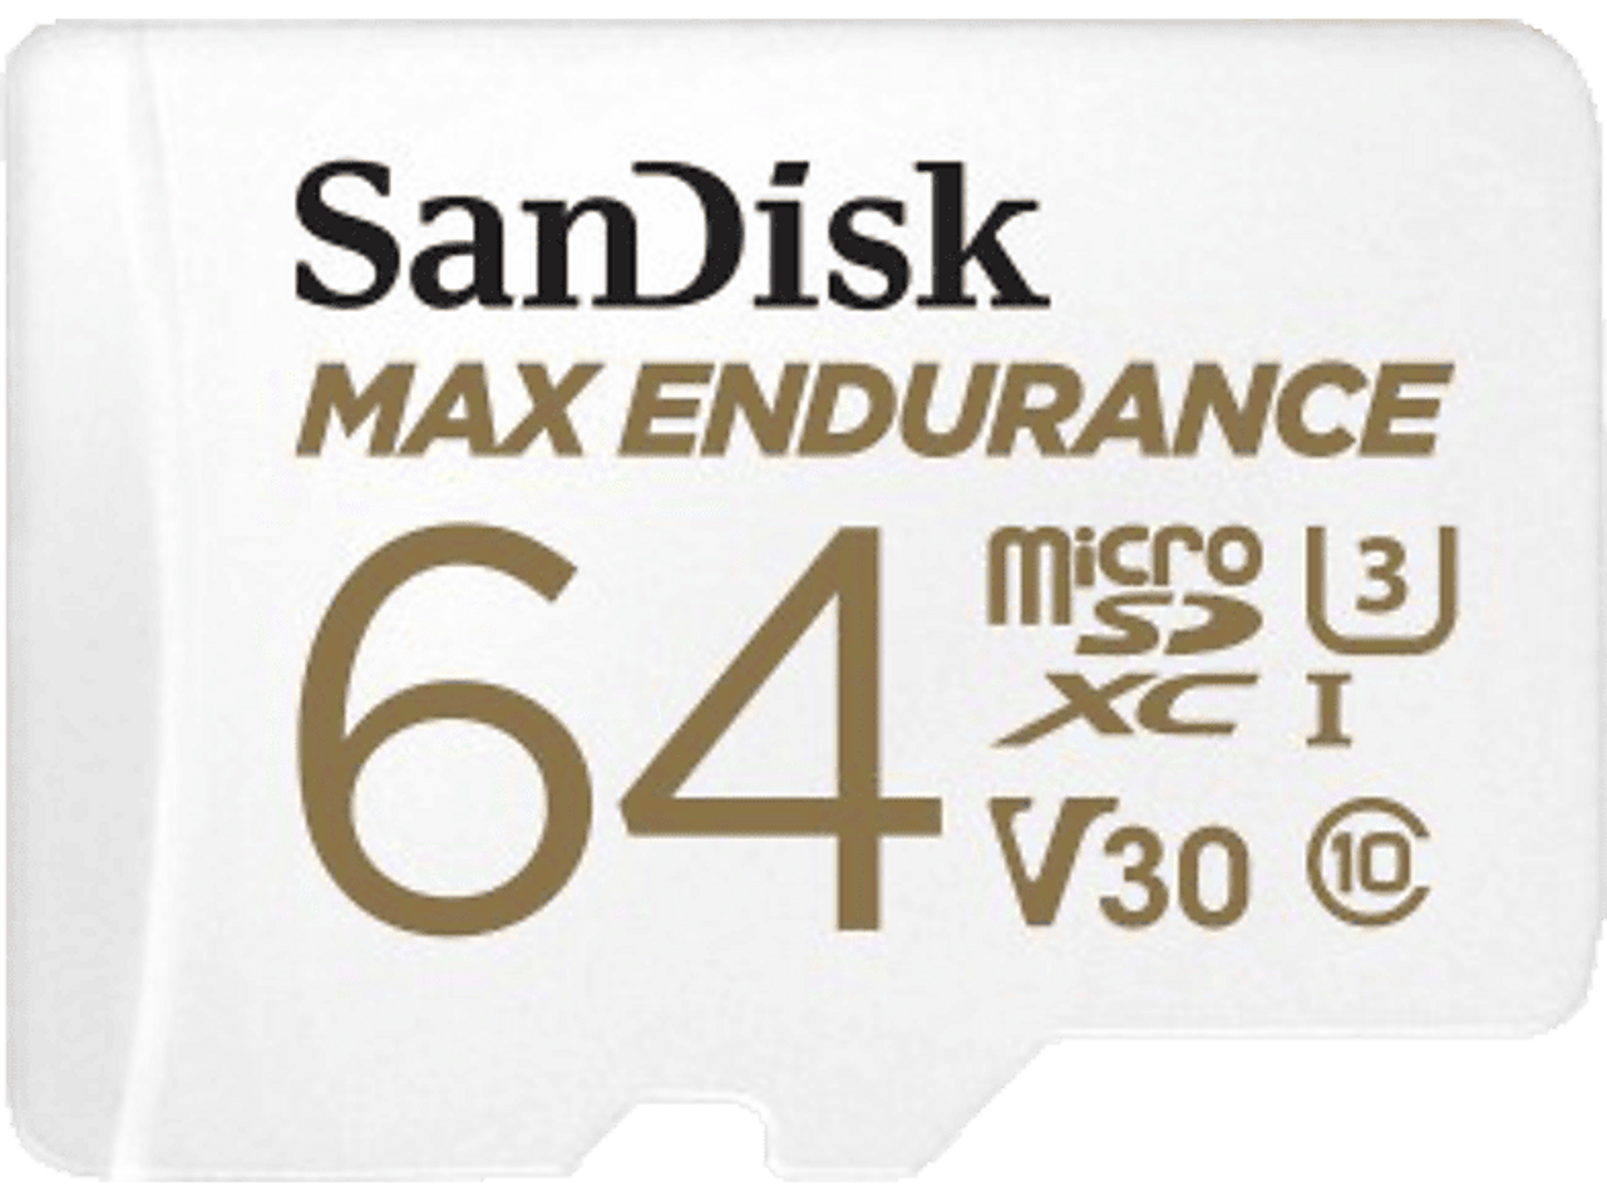 ENDURAN, 100 MSHC MB/s GB, MAX SANDISK 64 Micro-SD SDSQQVR-064G-GN6IA Speicherkarte,